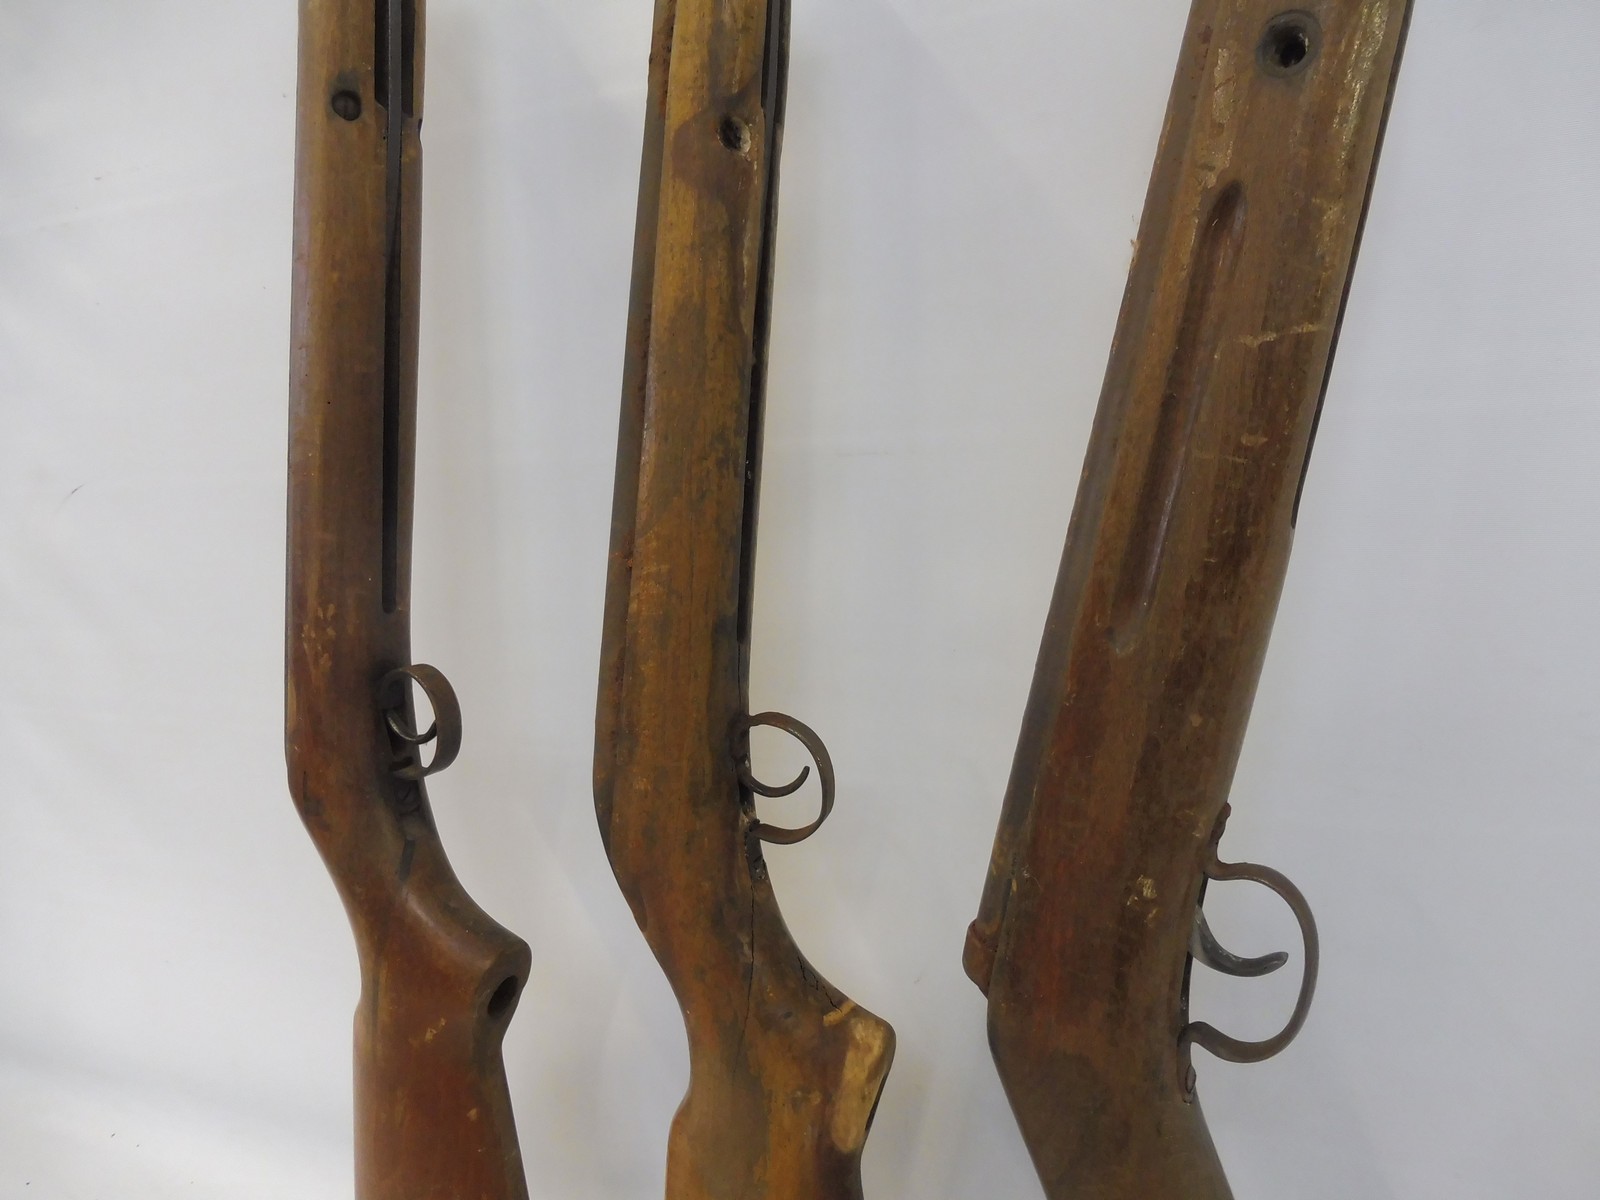 Three fairground shooting gallery original rifles for restoration, possibly German maker. - Image 2 of 5